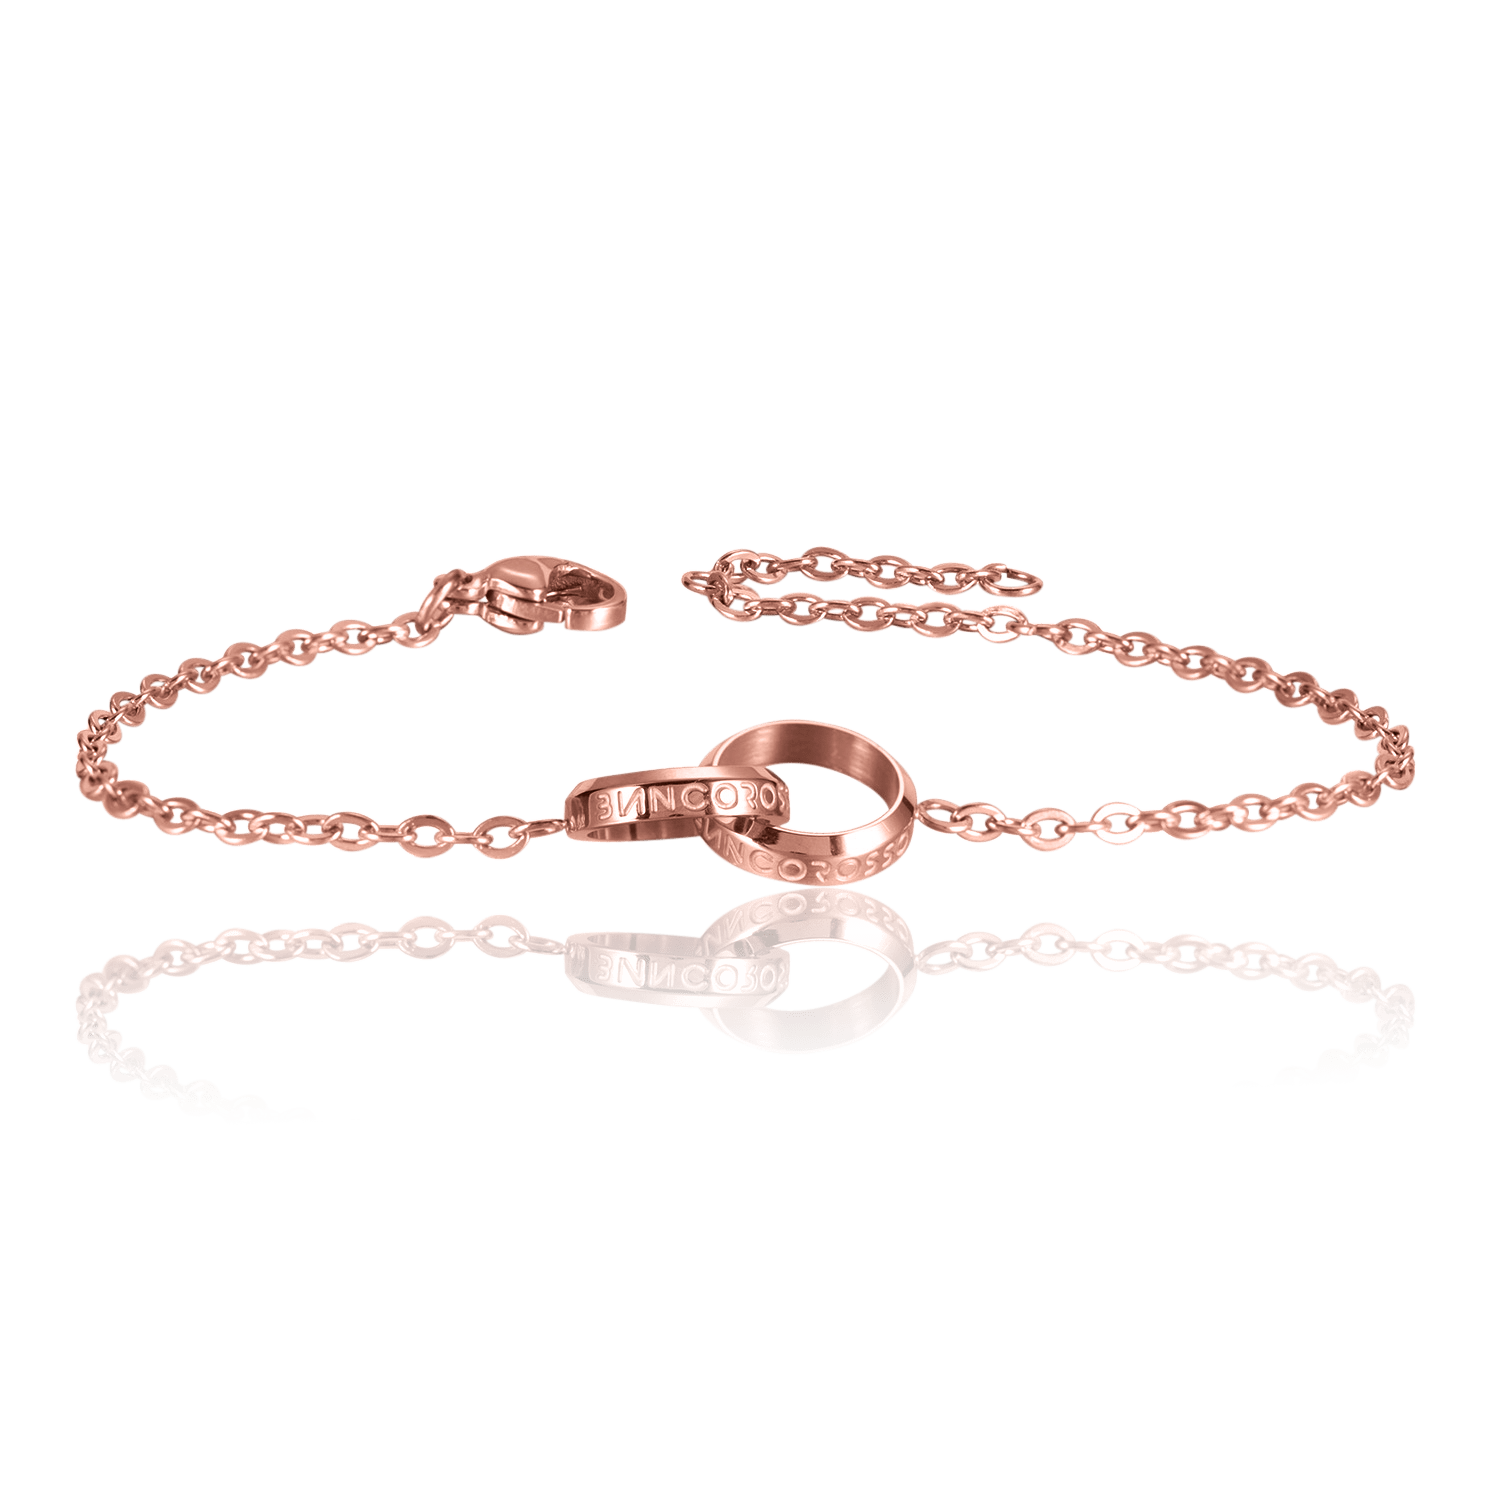 bianco rosso Bracelets To Every Woman - Eternity Bracelet cyprus greece jewelry gift free shipping europe worldwide